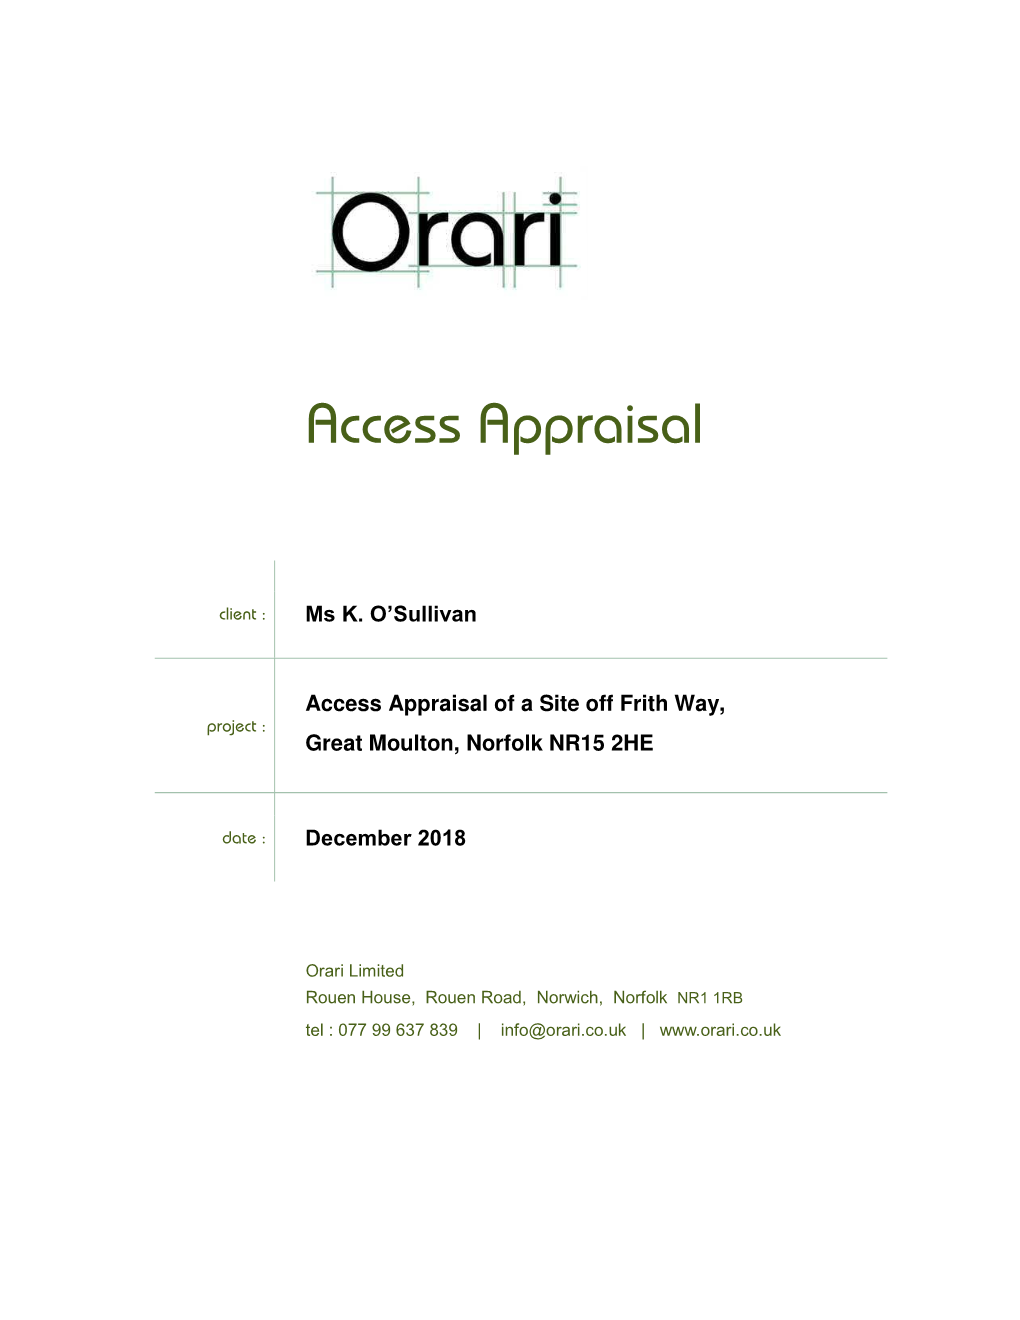 Orari-1893-Gt Moulton GNLP Access Appraisal